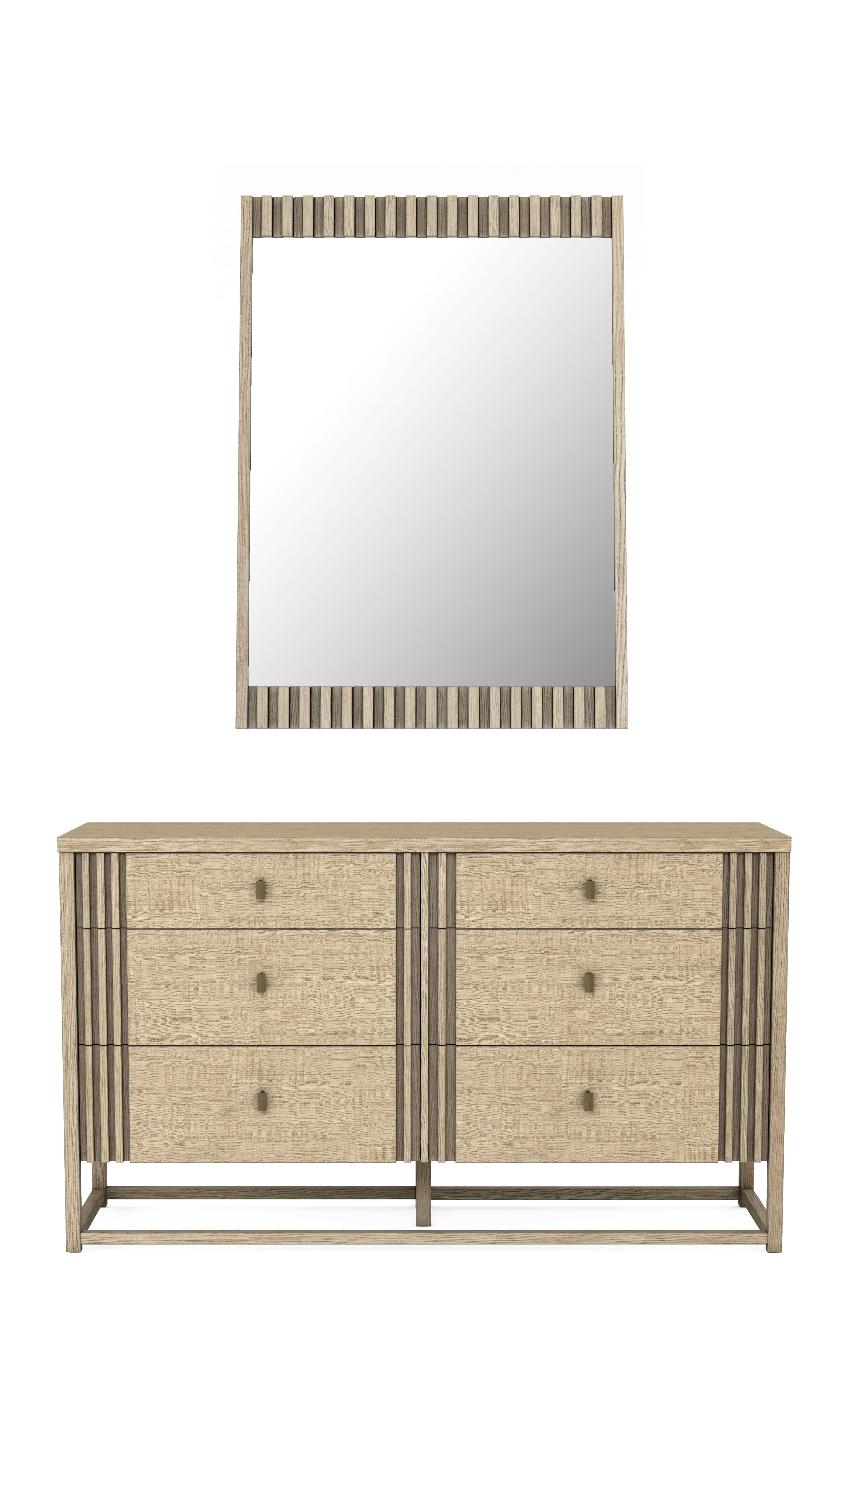 Modern, Transitional Dresser With Mirror North Side 269130-2556-2pcs in Beige 